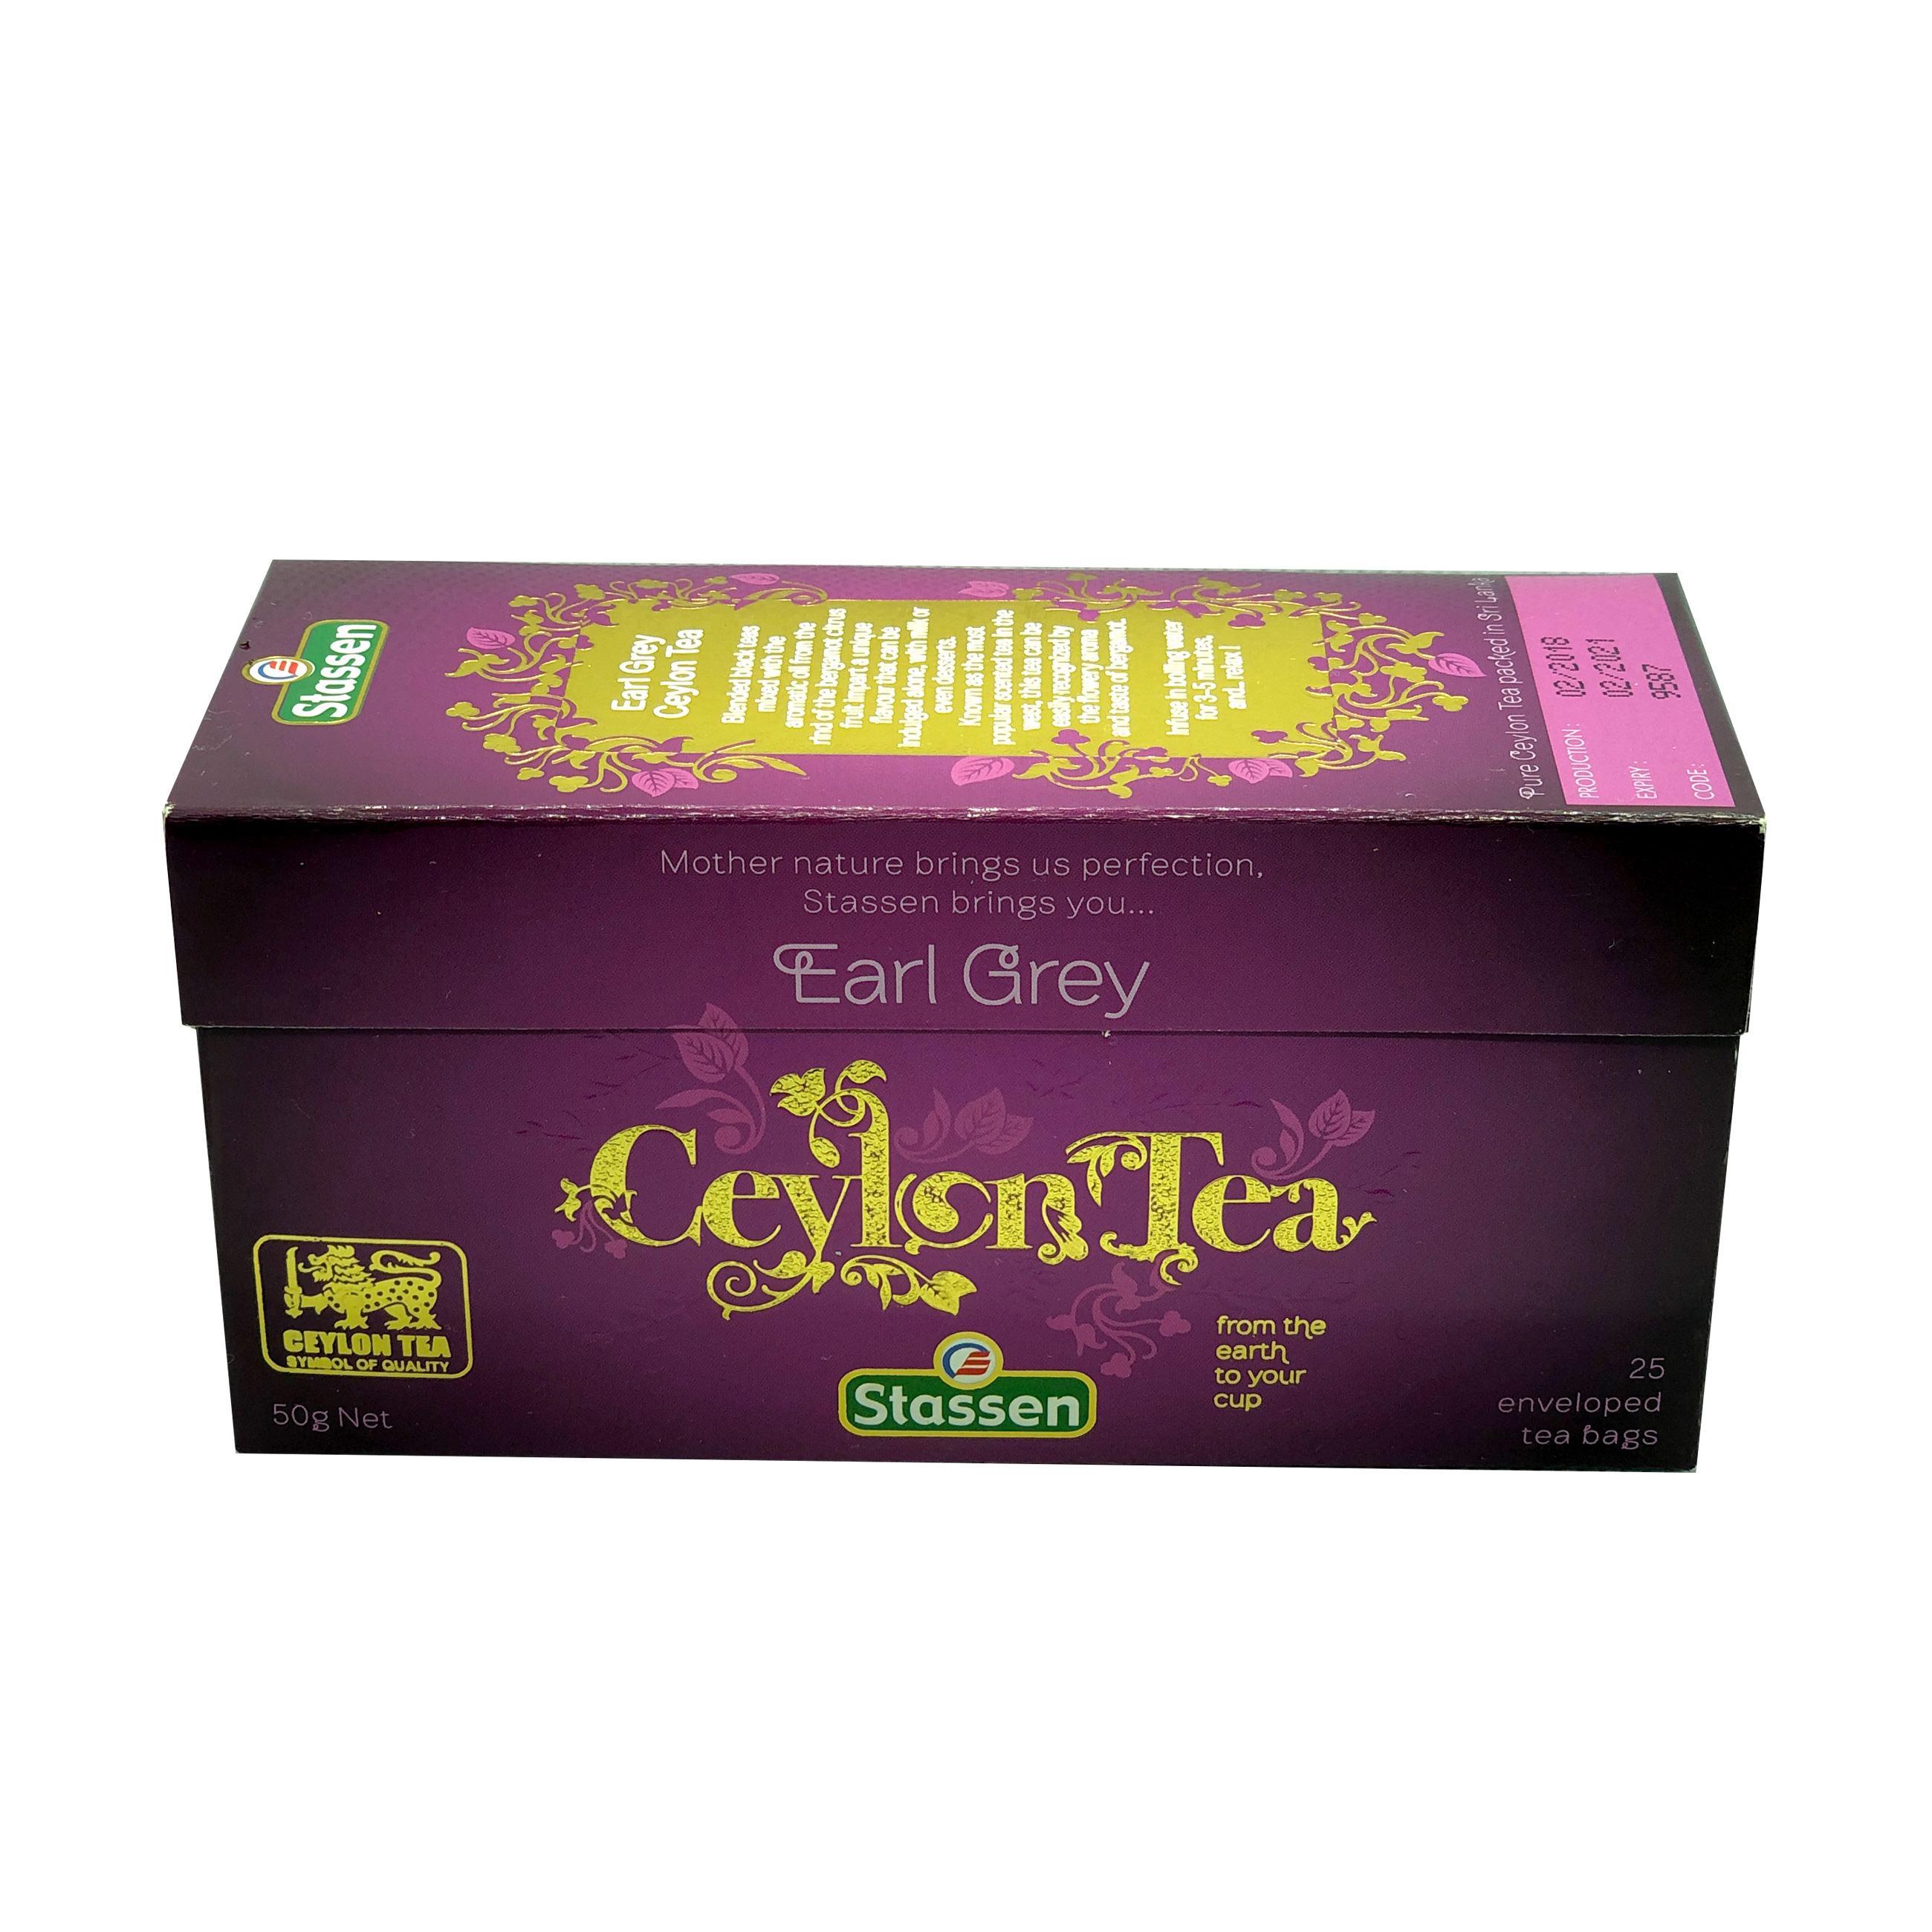 Ceai Ceylon Earl Grey,  50gr, Stassen